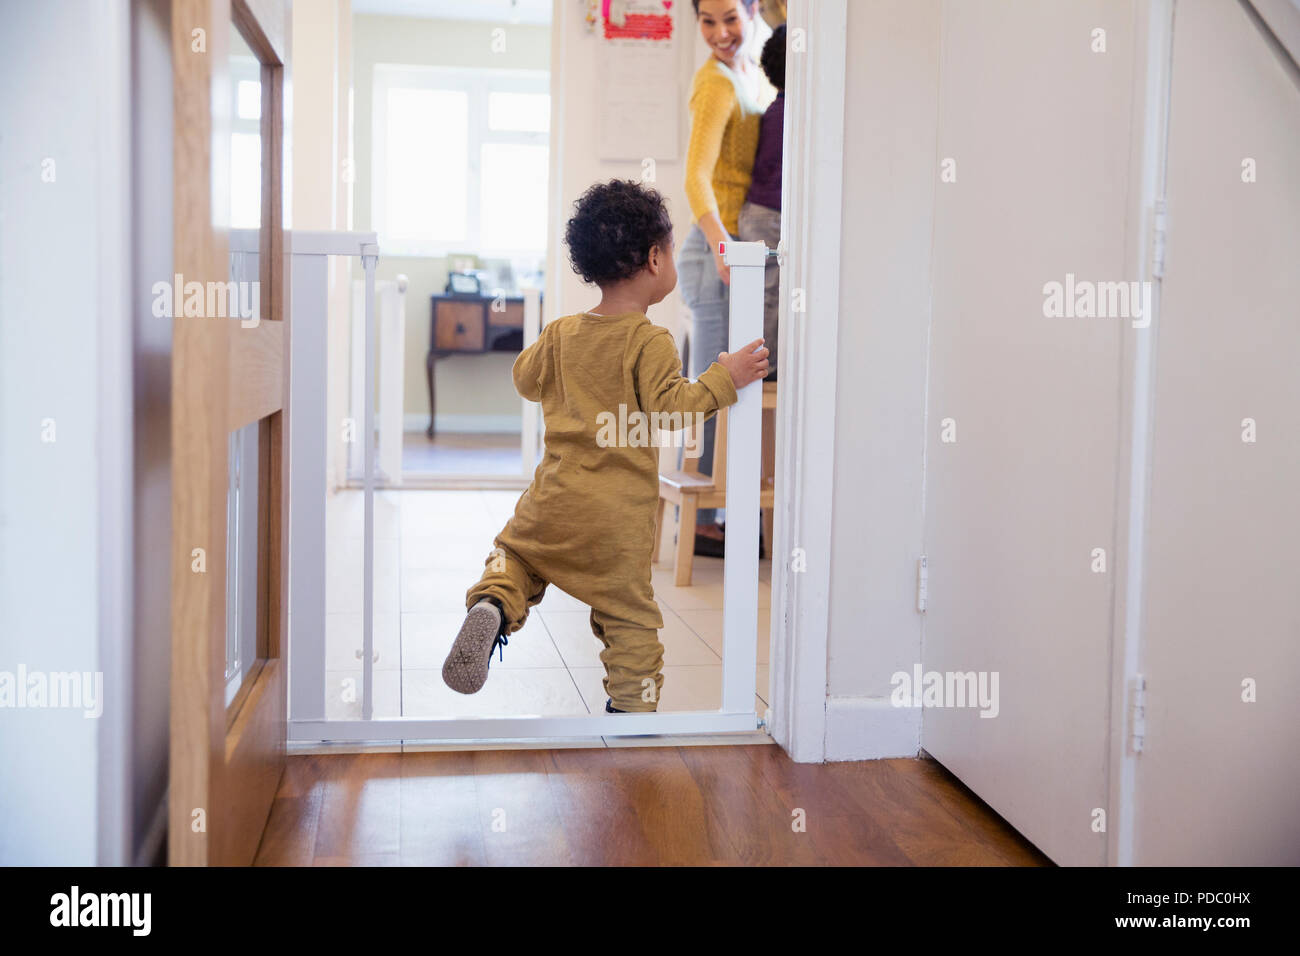 Cute baby boy balancing in doorway Stock Photo